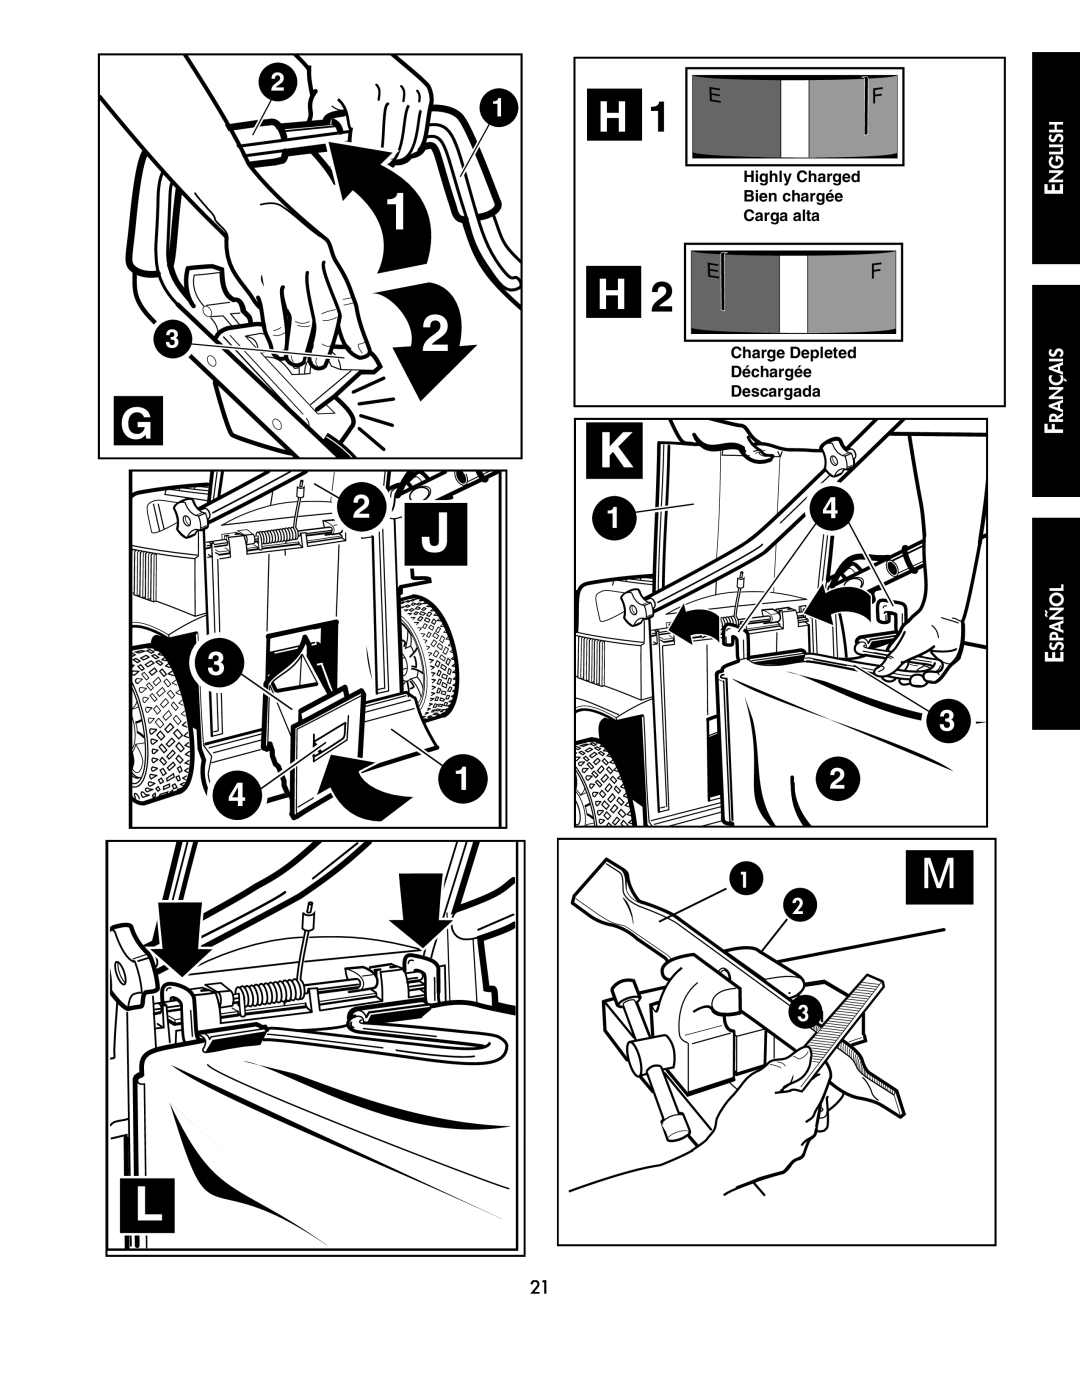 Black & Decker CMM1000 instruction manual English Français Español, Highly Charged, Bien chargée, Carga alta 